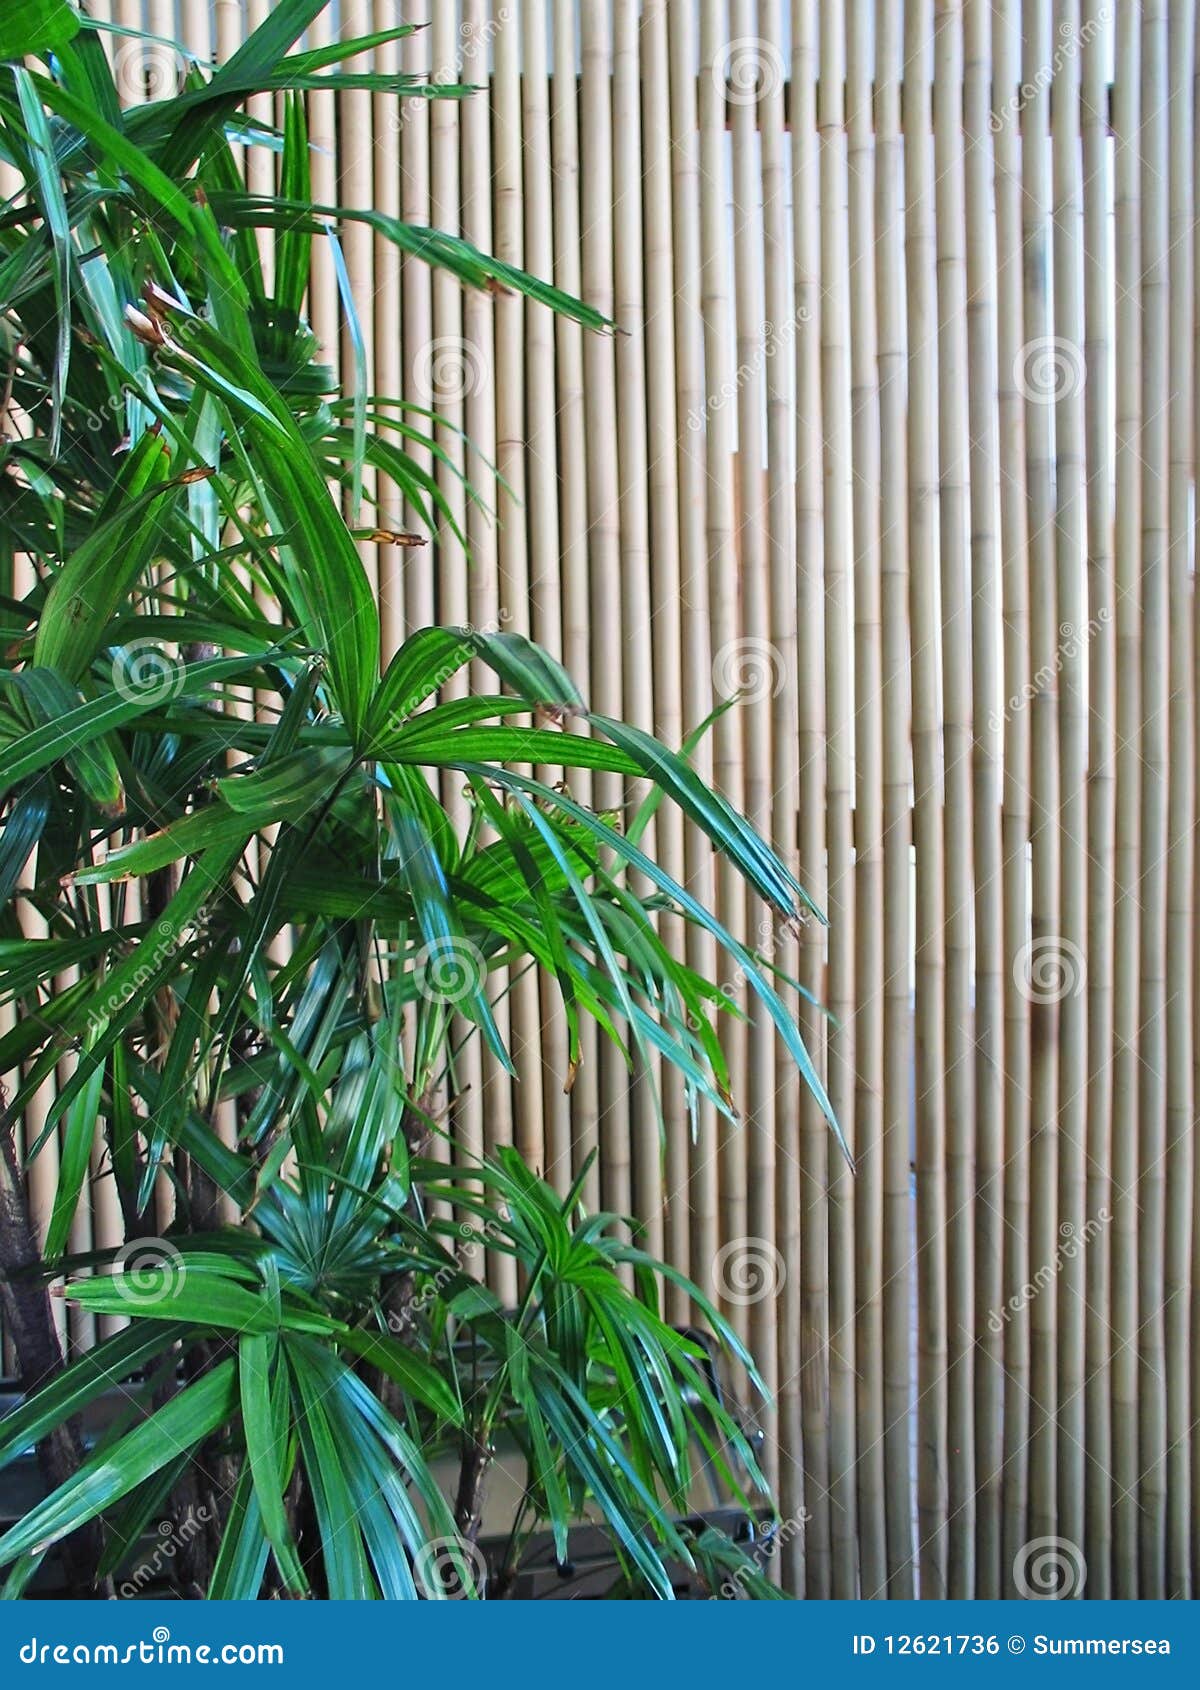 1,340 Bamboo Screen Stock Photos - Free & Royalty-Free Stock